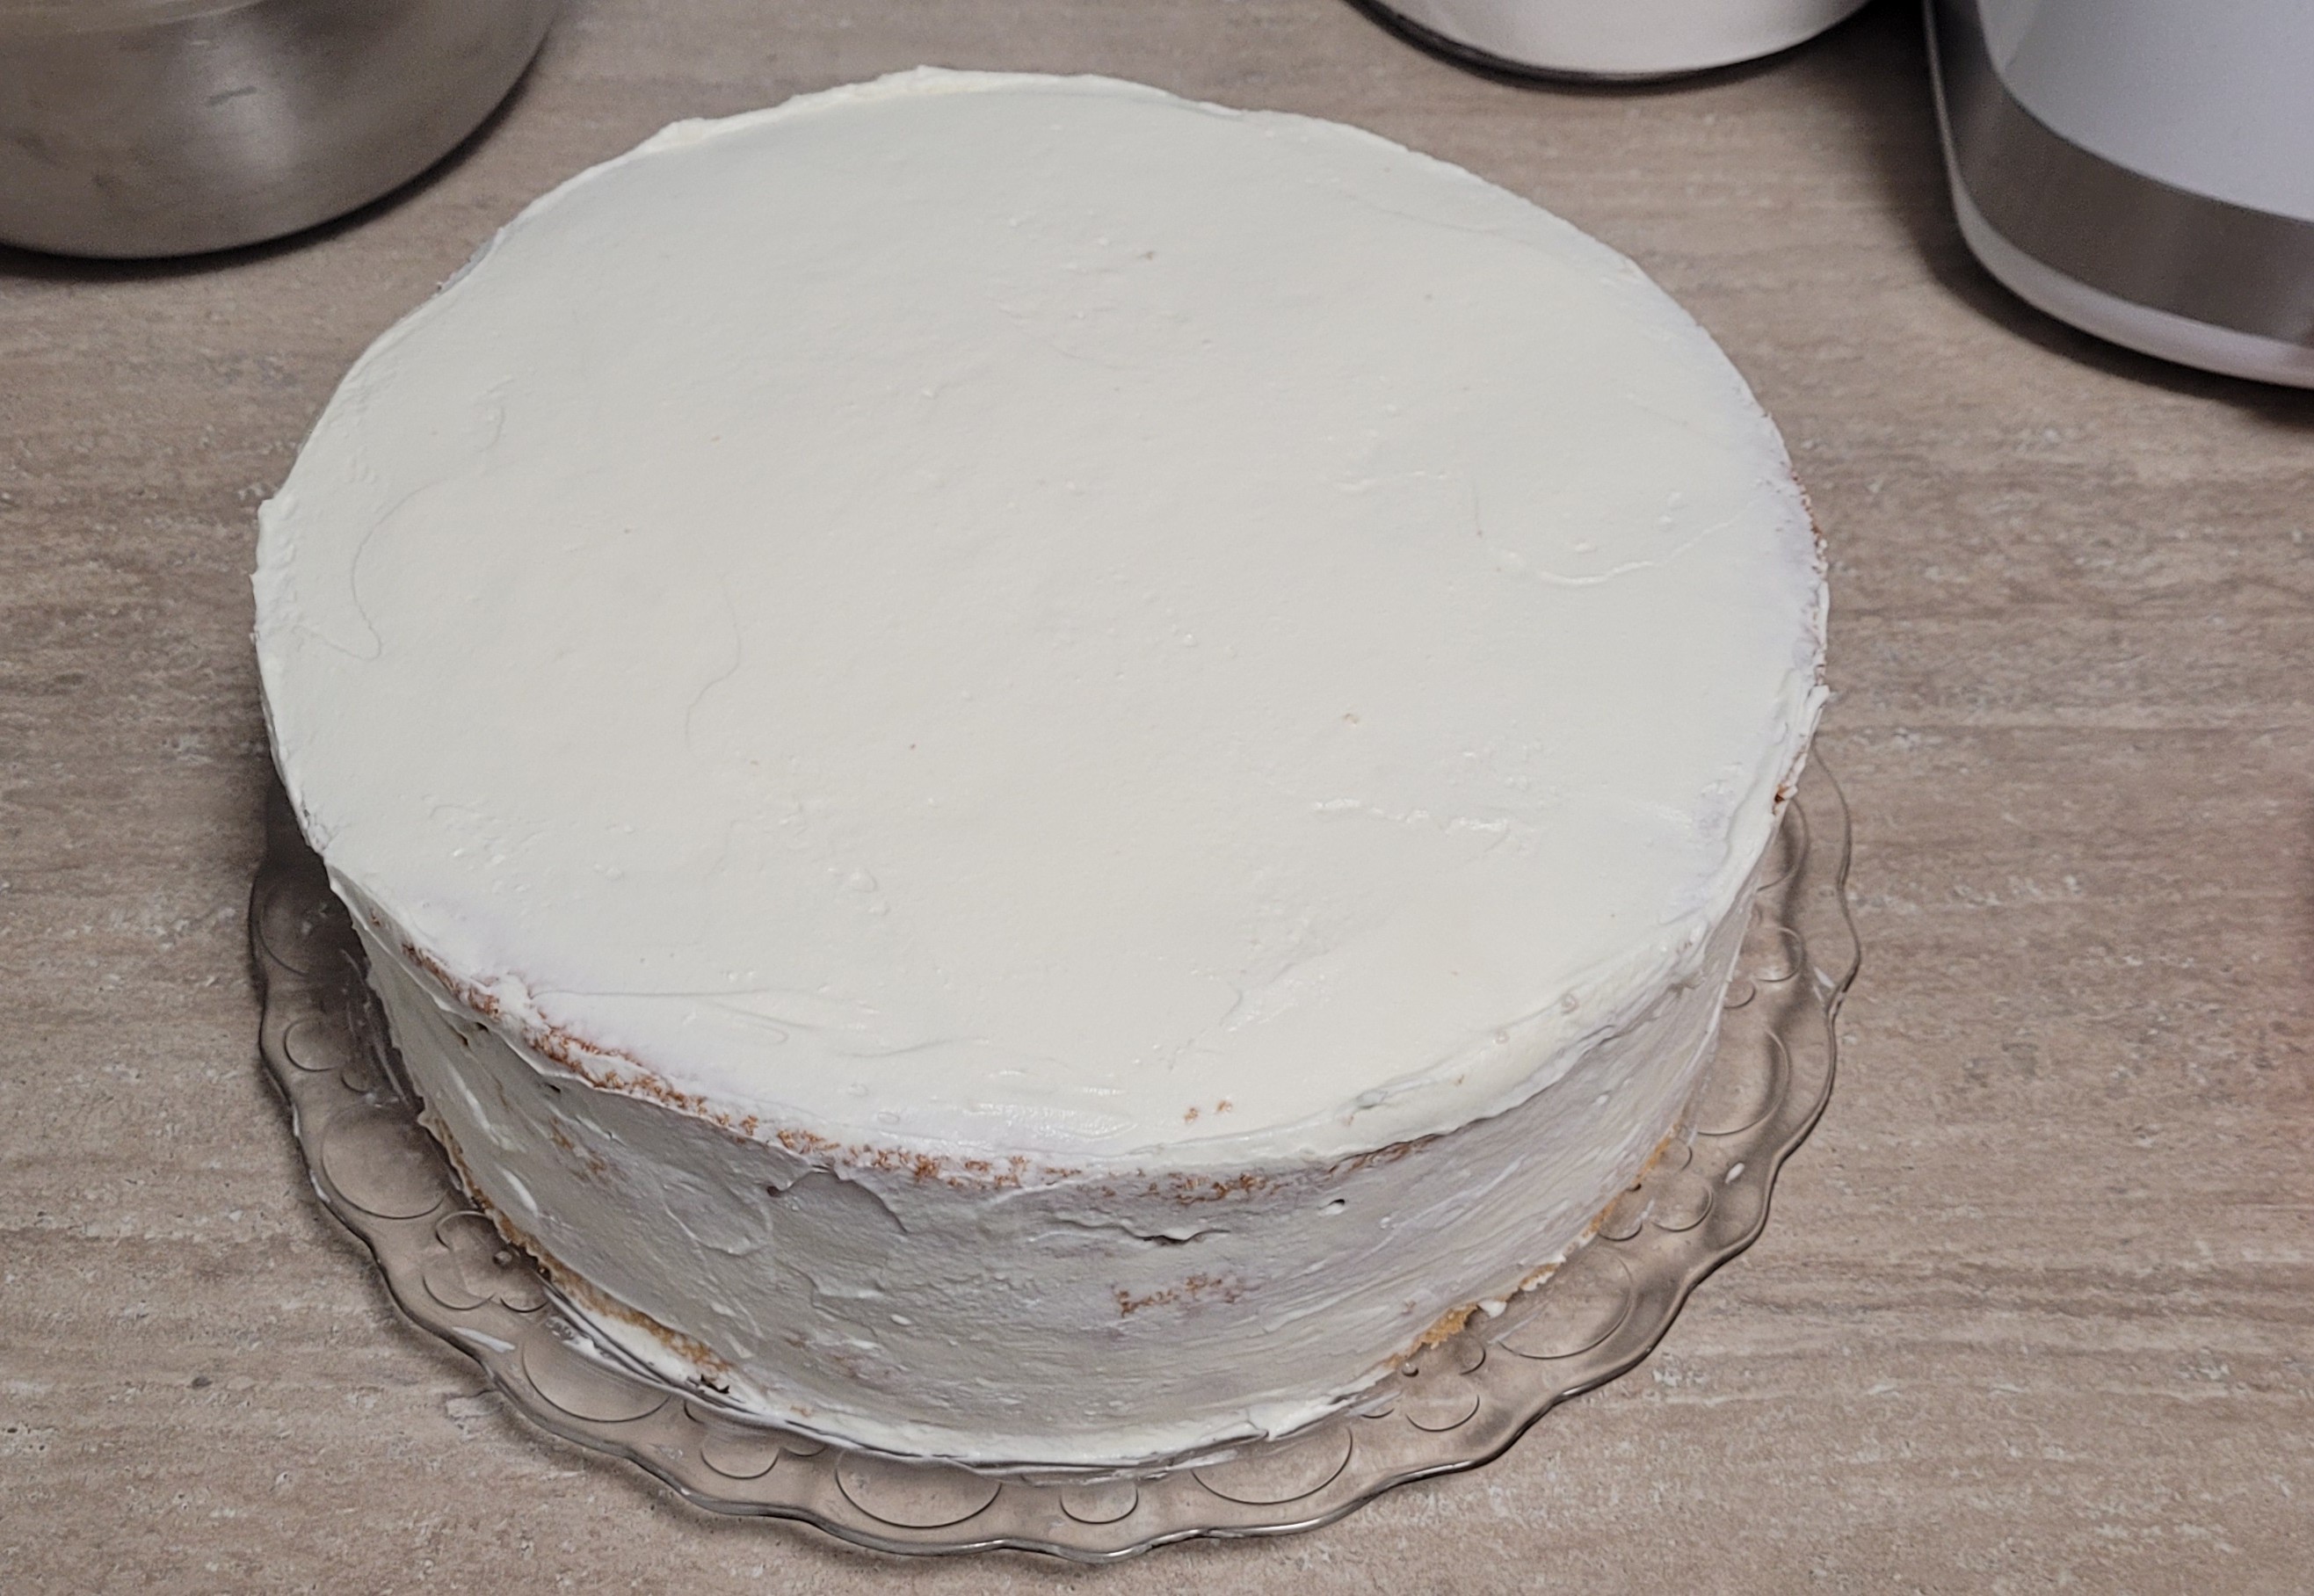 Desert tort aniversar cu crema de mascarpone si fructe - reteta cu nr. 1100